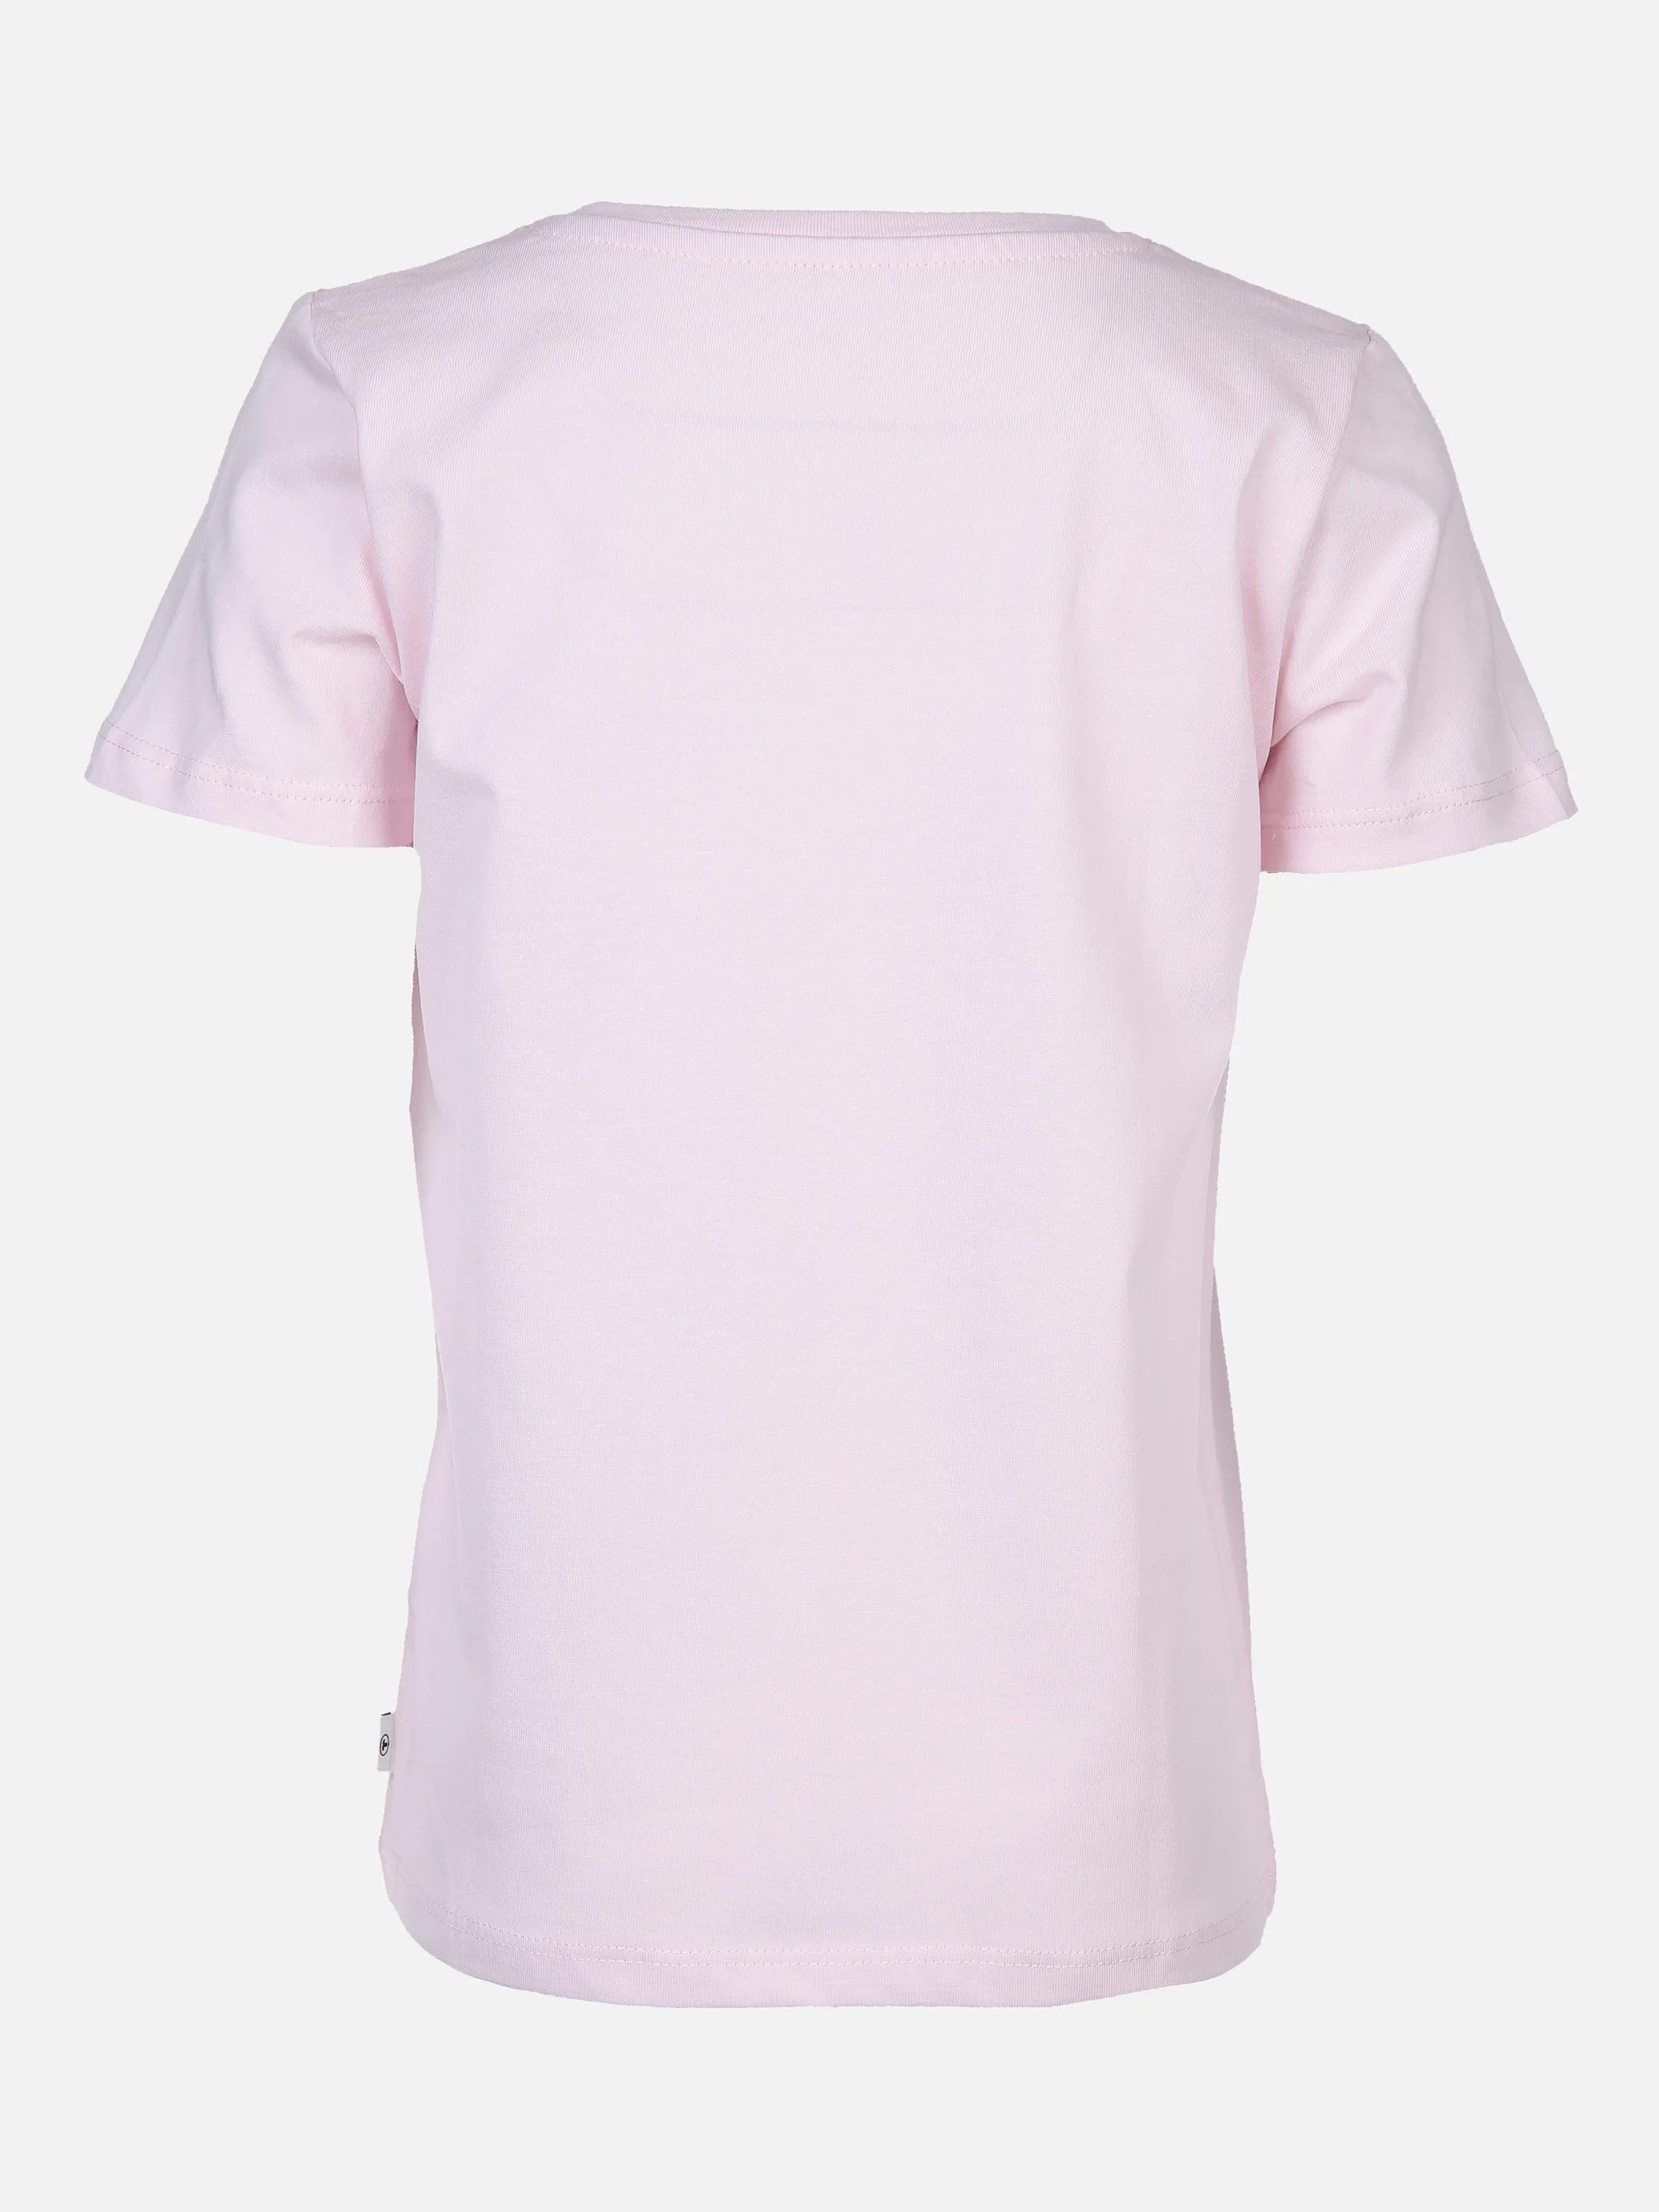 Tom Tailor 1030724 printed t-shirt Rosa 860536 29362 2